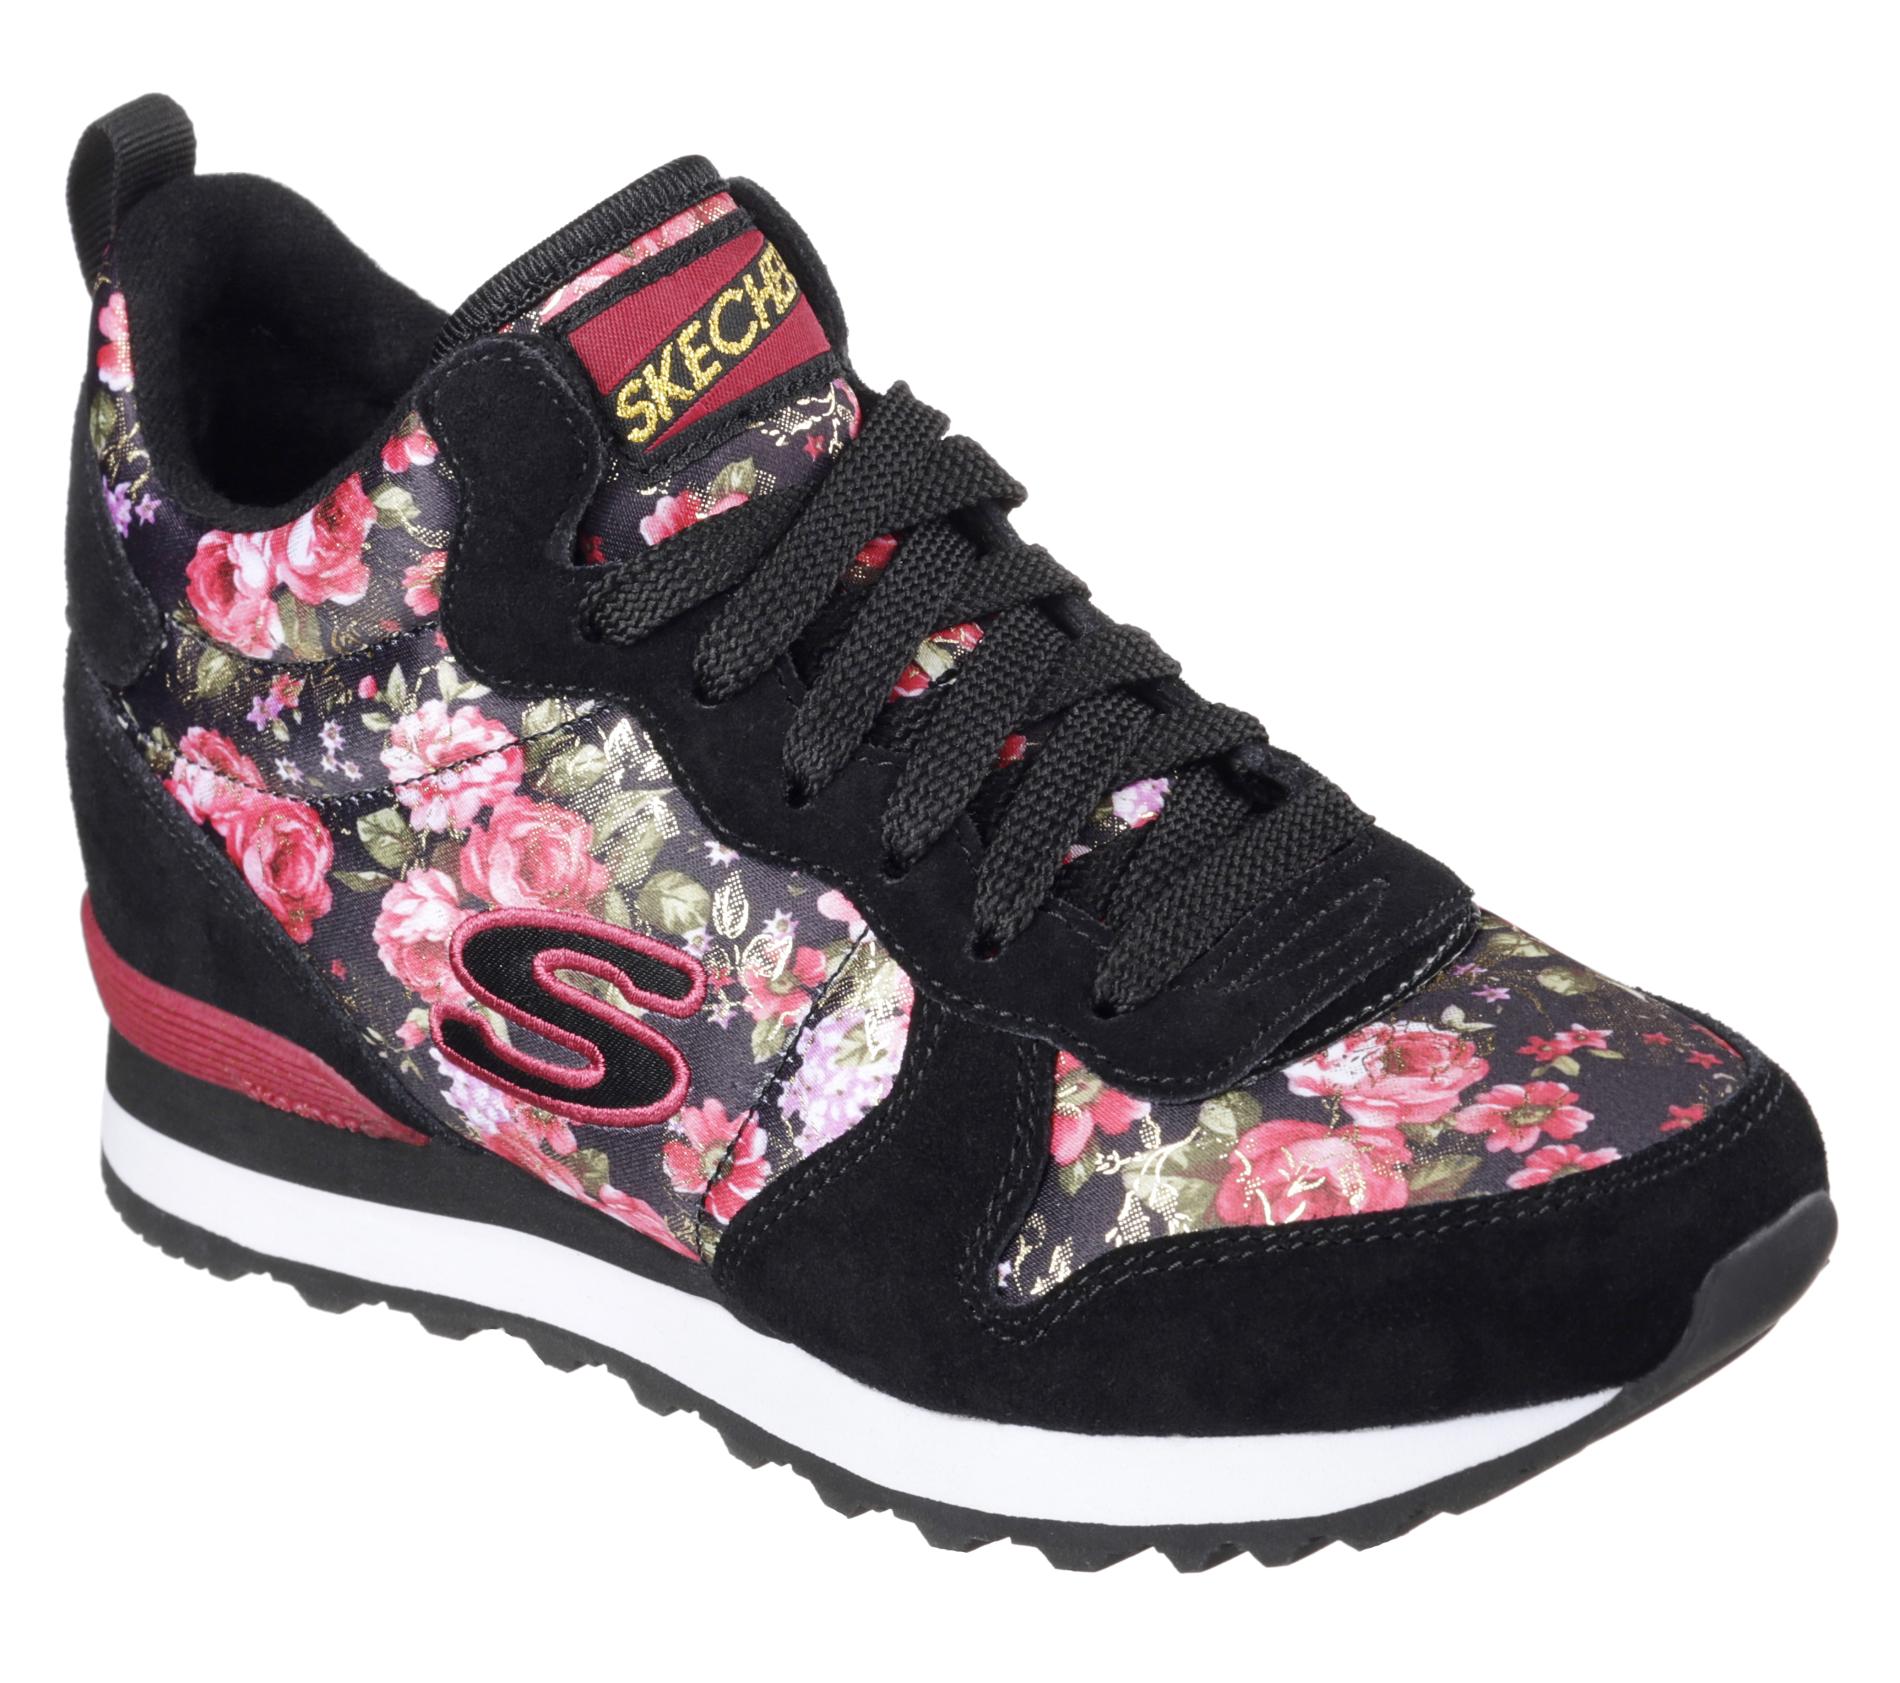 Skechers Women's Hollywood Rose Athletic Shoe - Black Floral